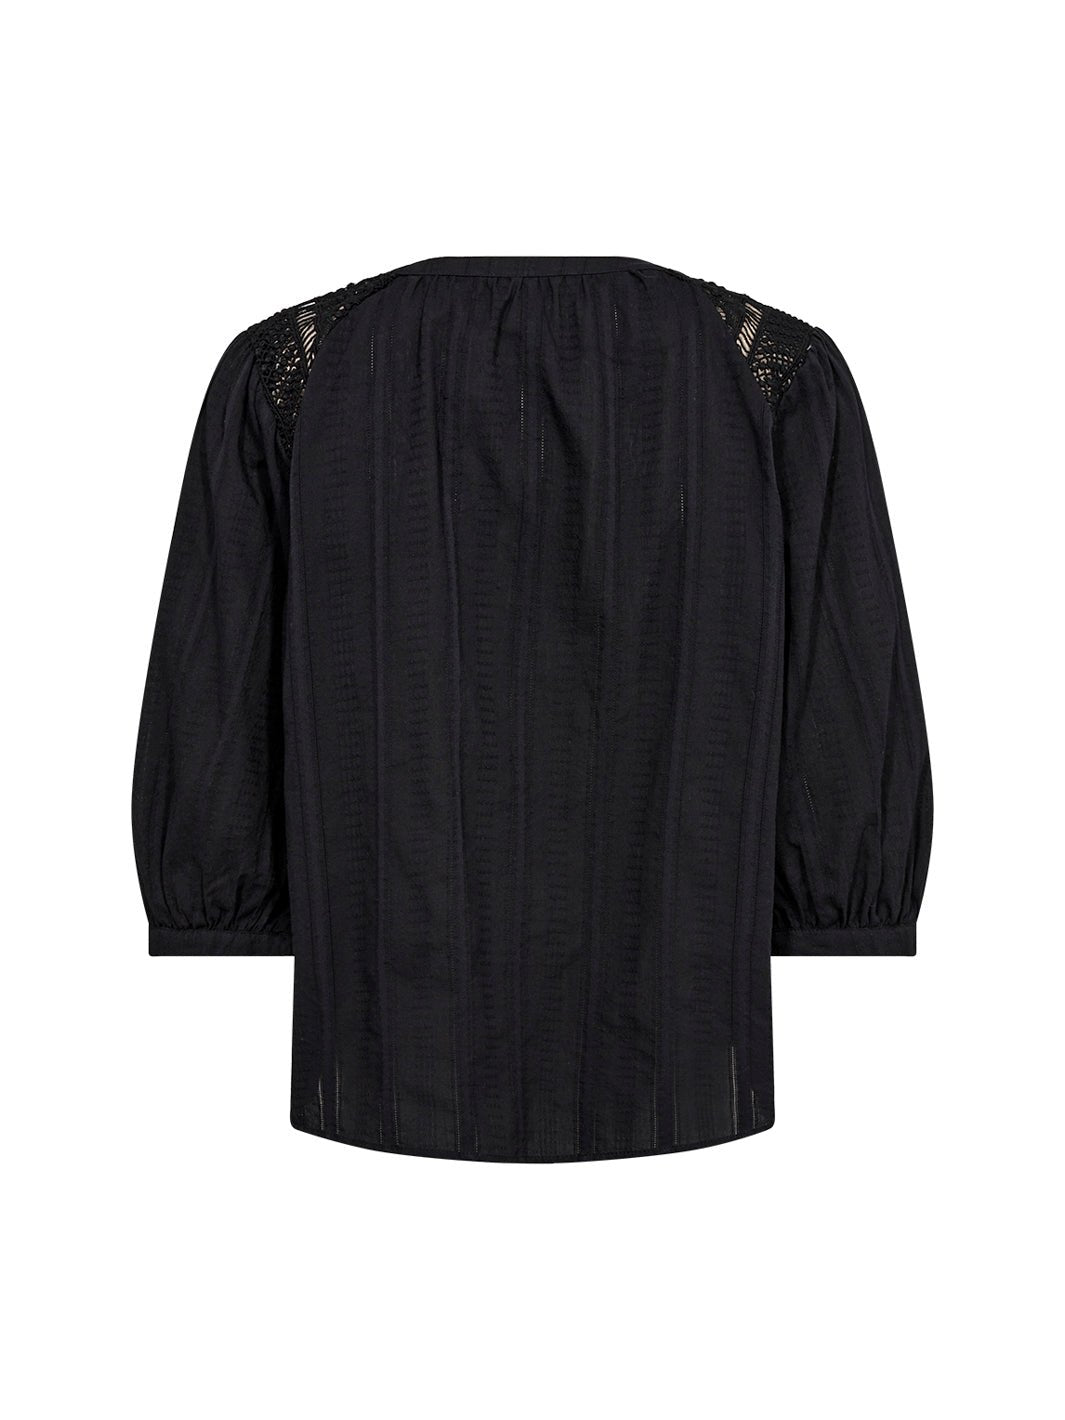 Soya Concept Edona 1 shirt black - Online-Mode